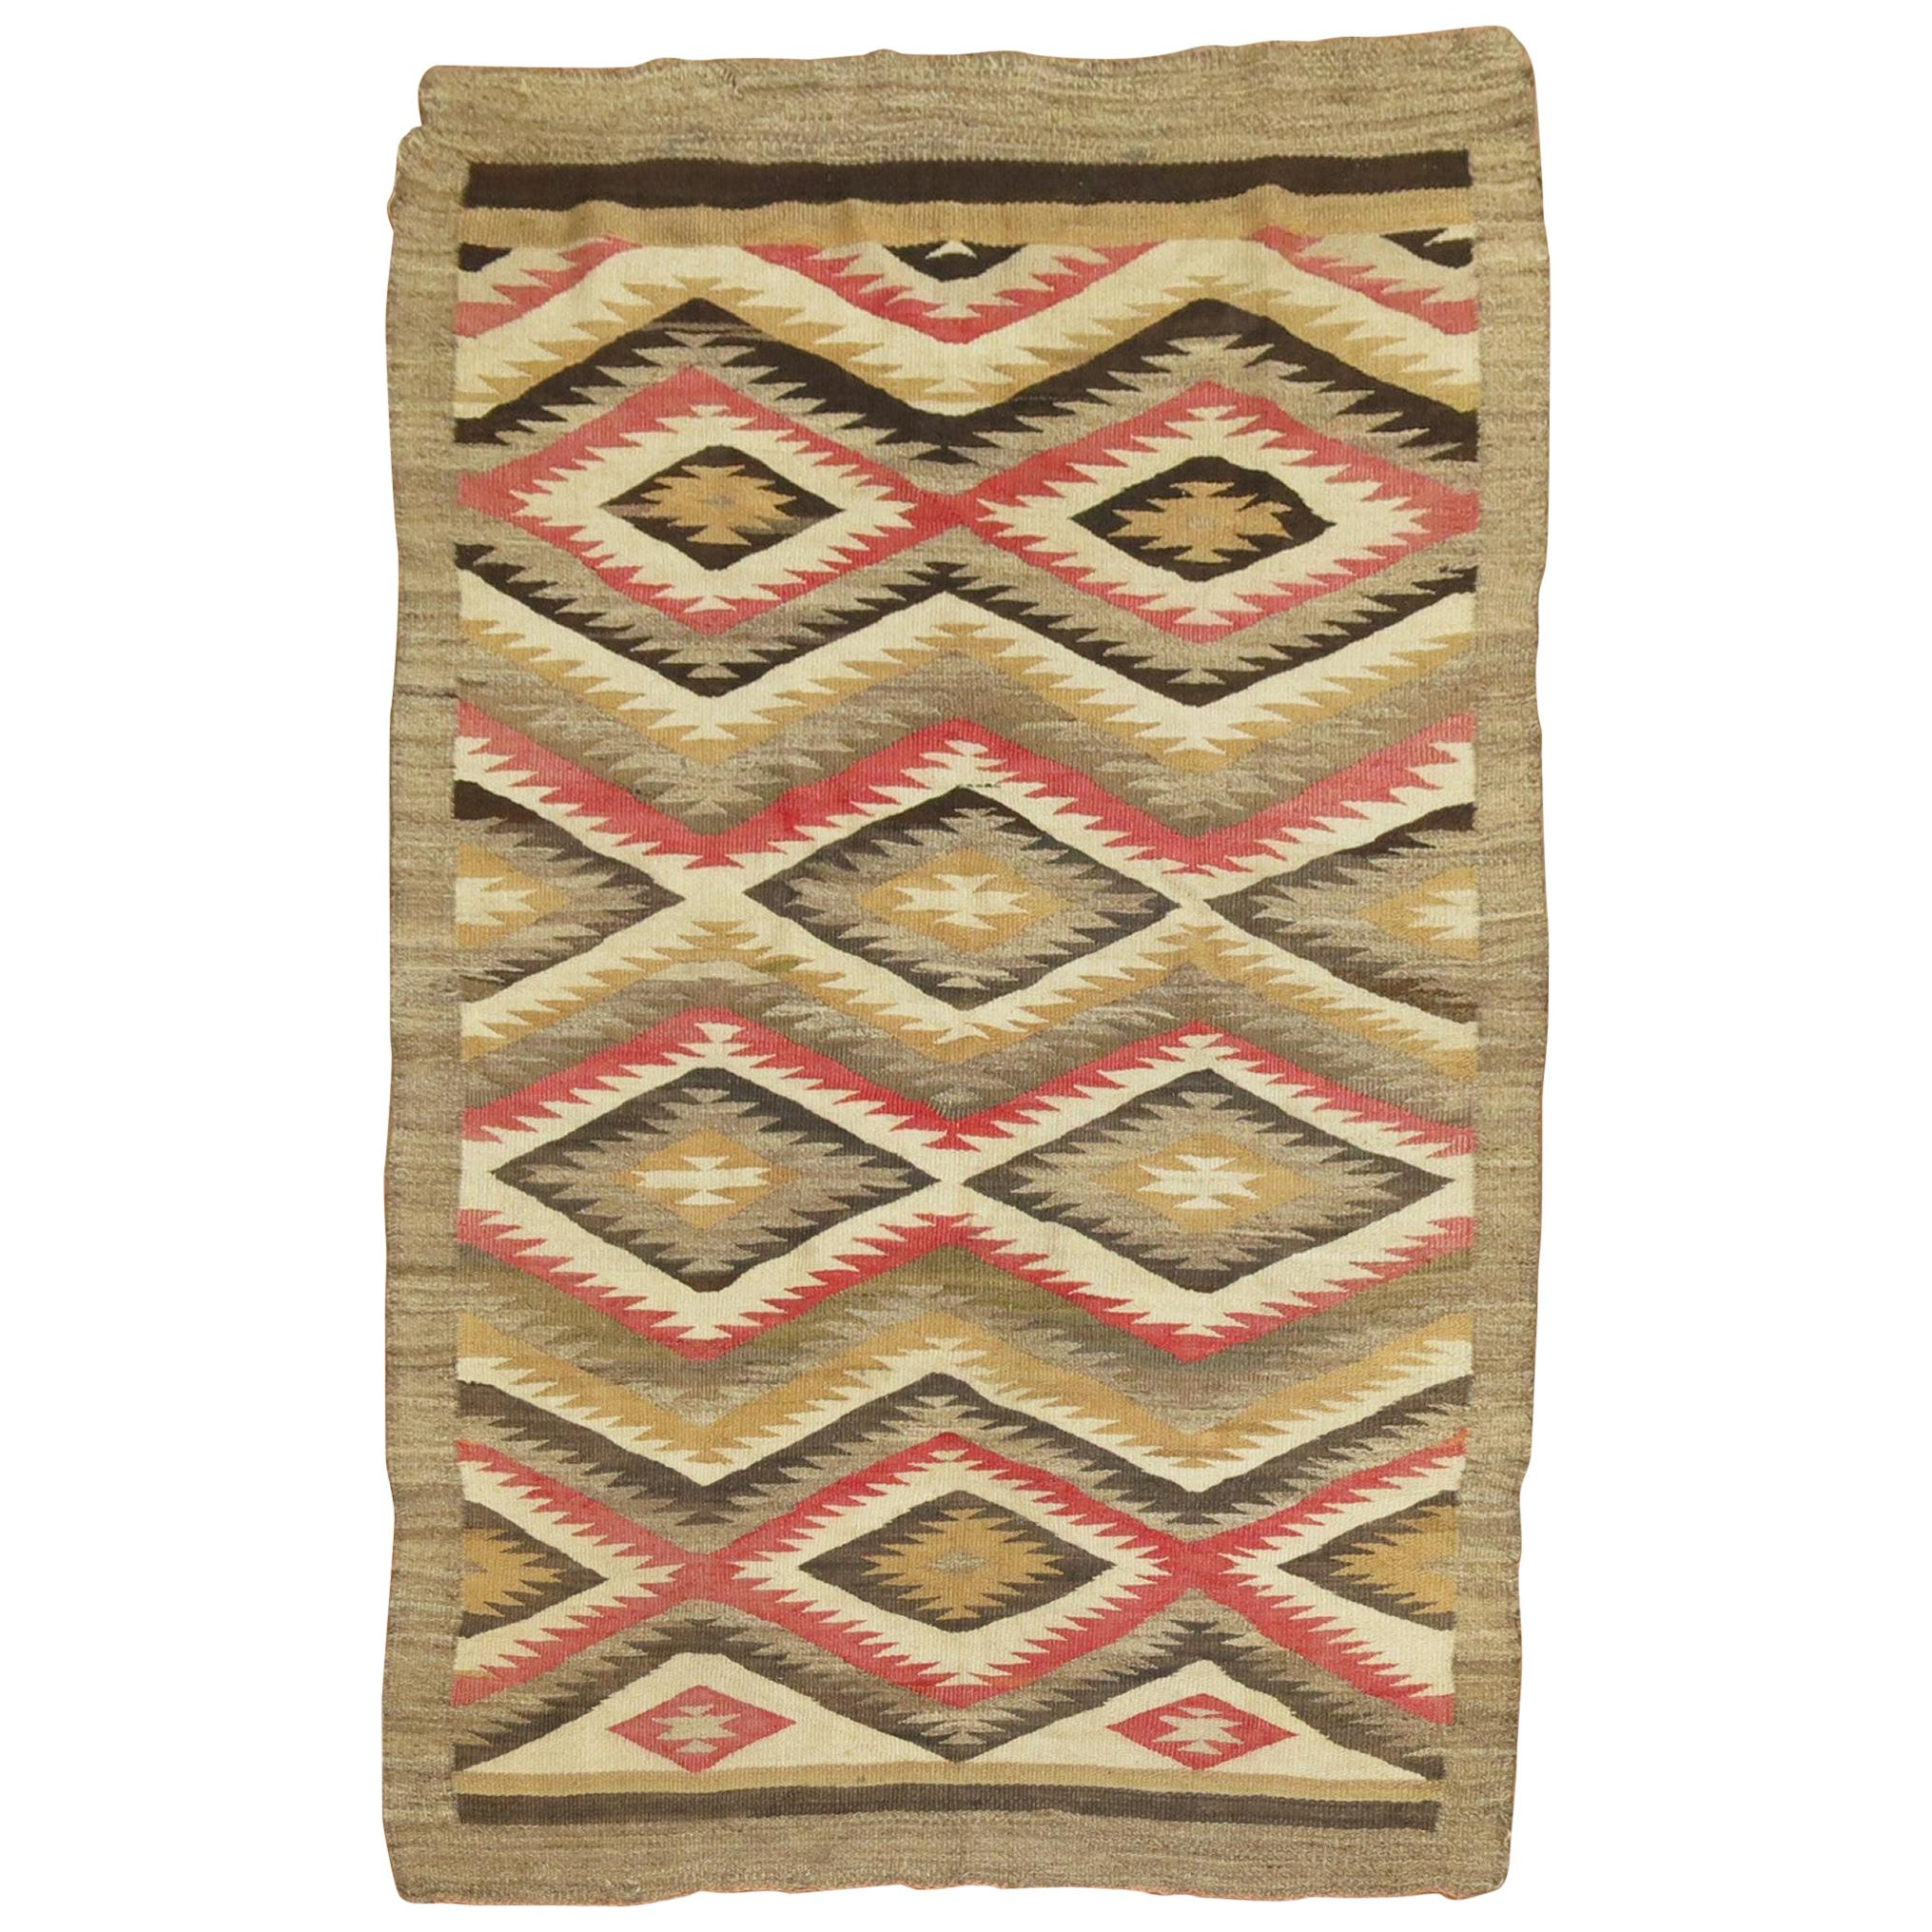 Tribal Geometric Primitive Camel Field Antique American Navajo Rug